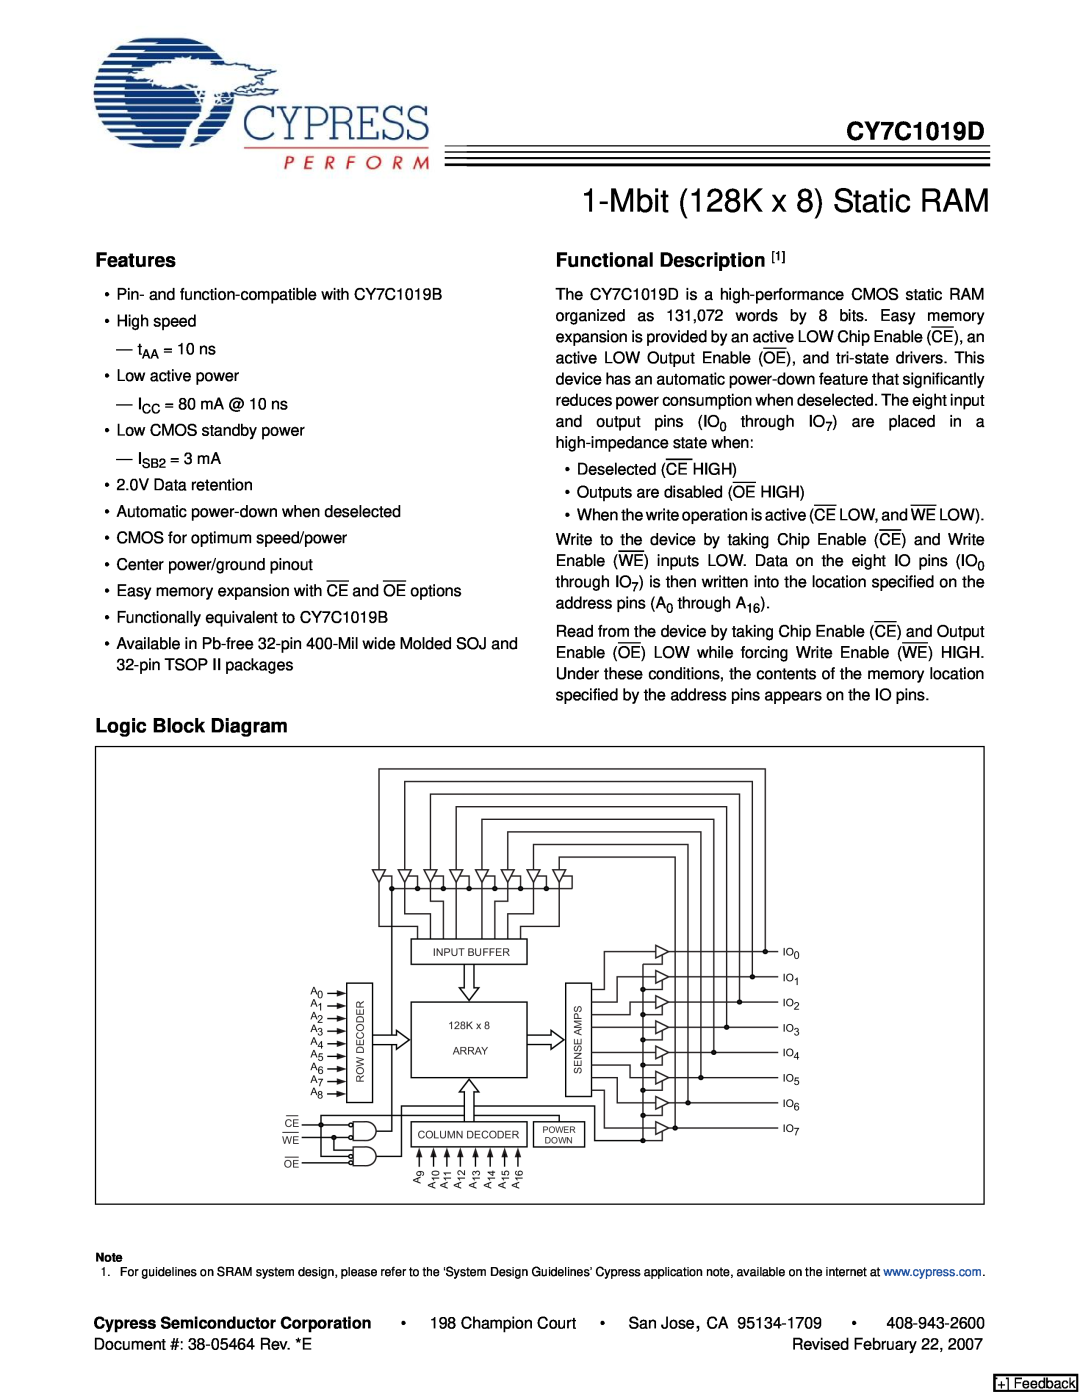 Cypress CY7C1019D manual Features, Functional Description, Logic Block Diagram, Cypress Semiconductor Corporation 